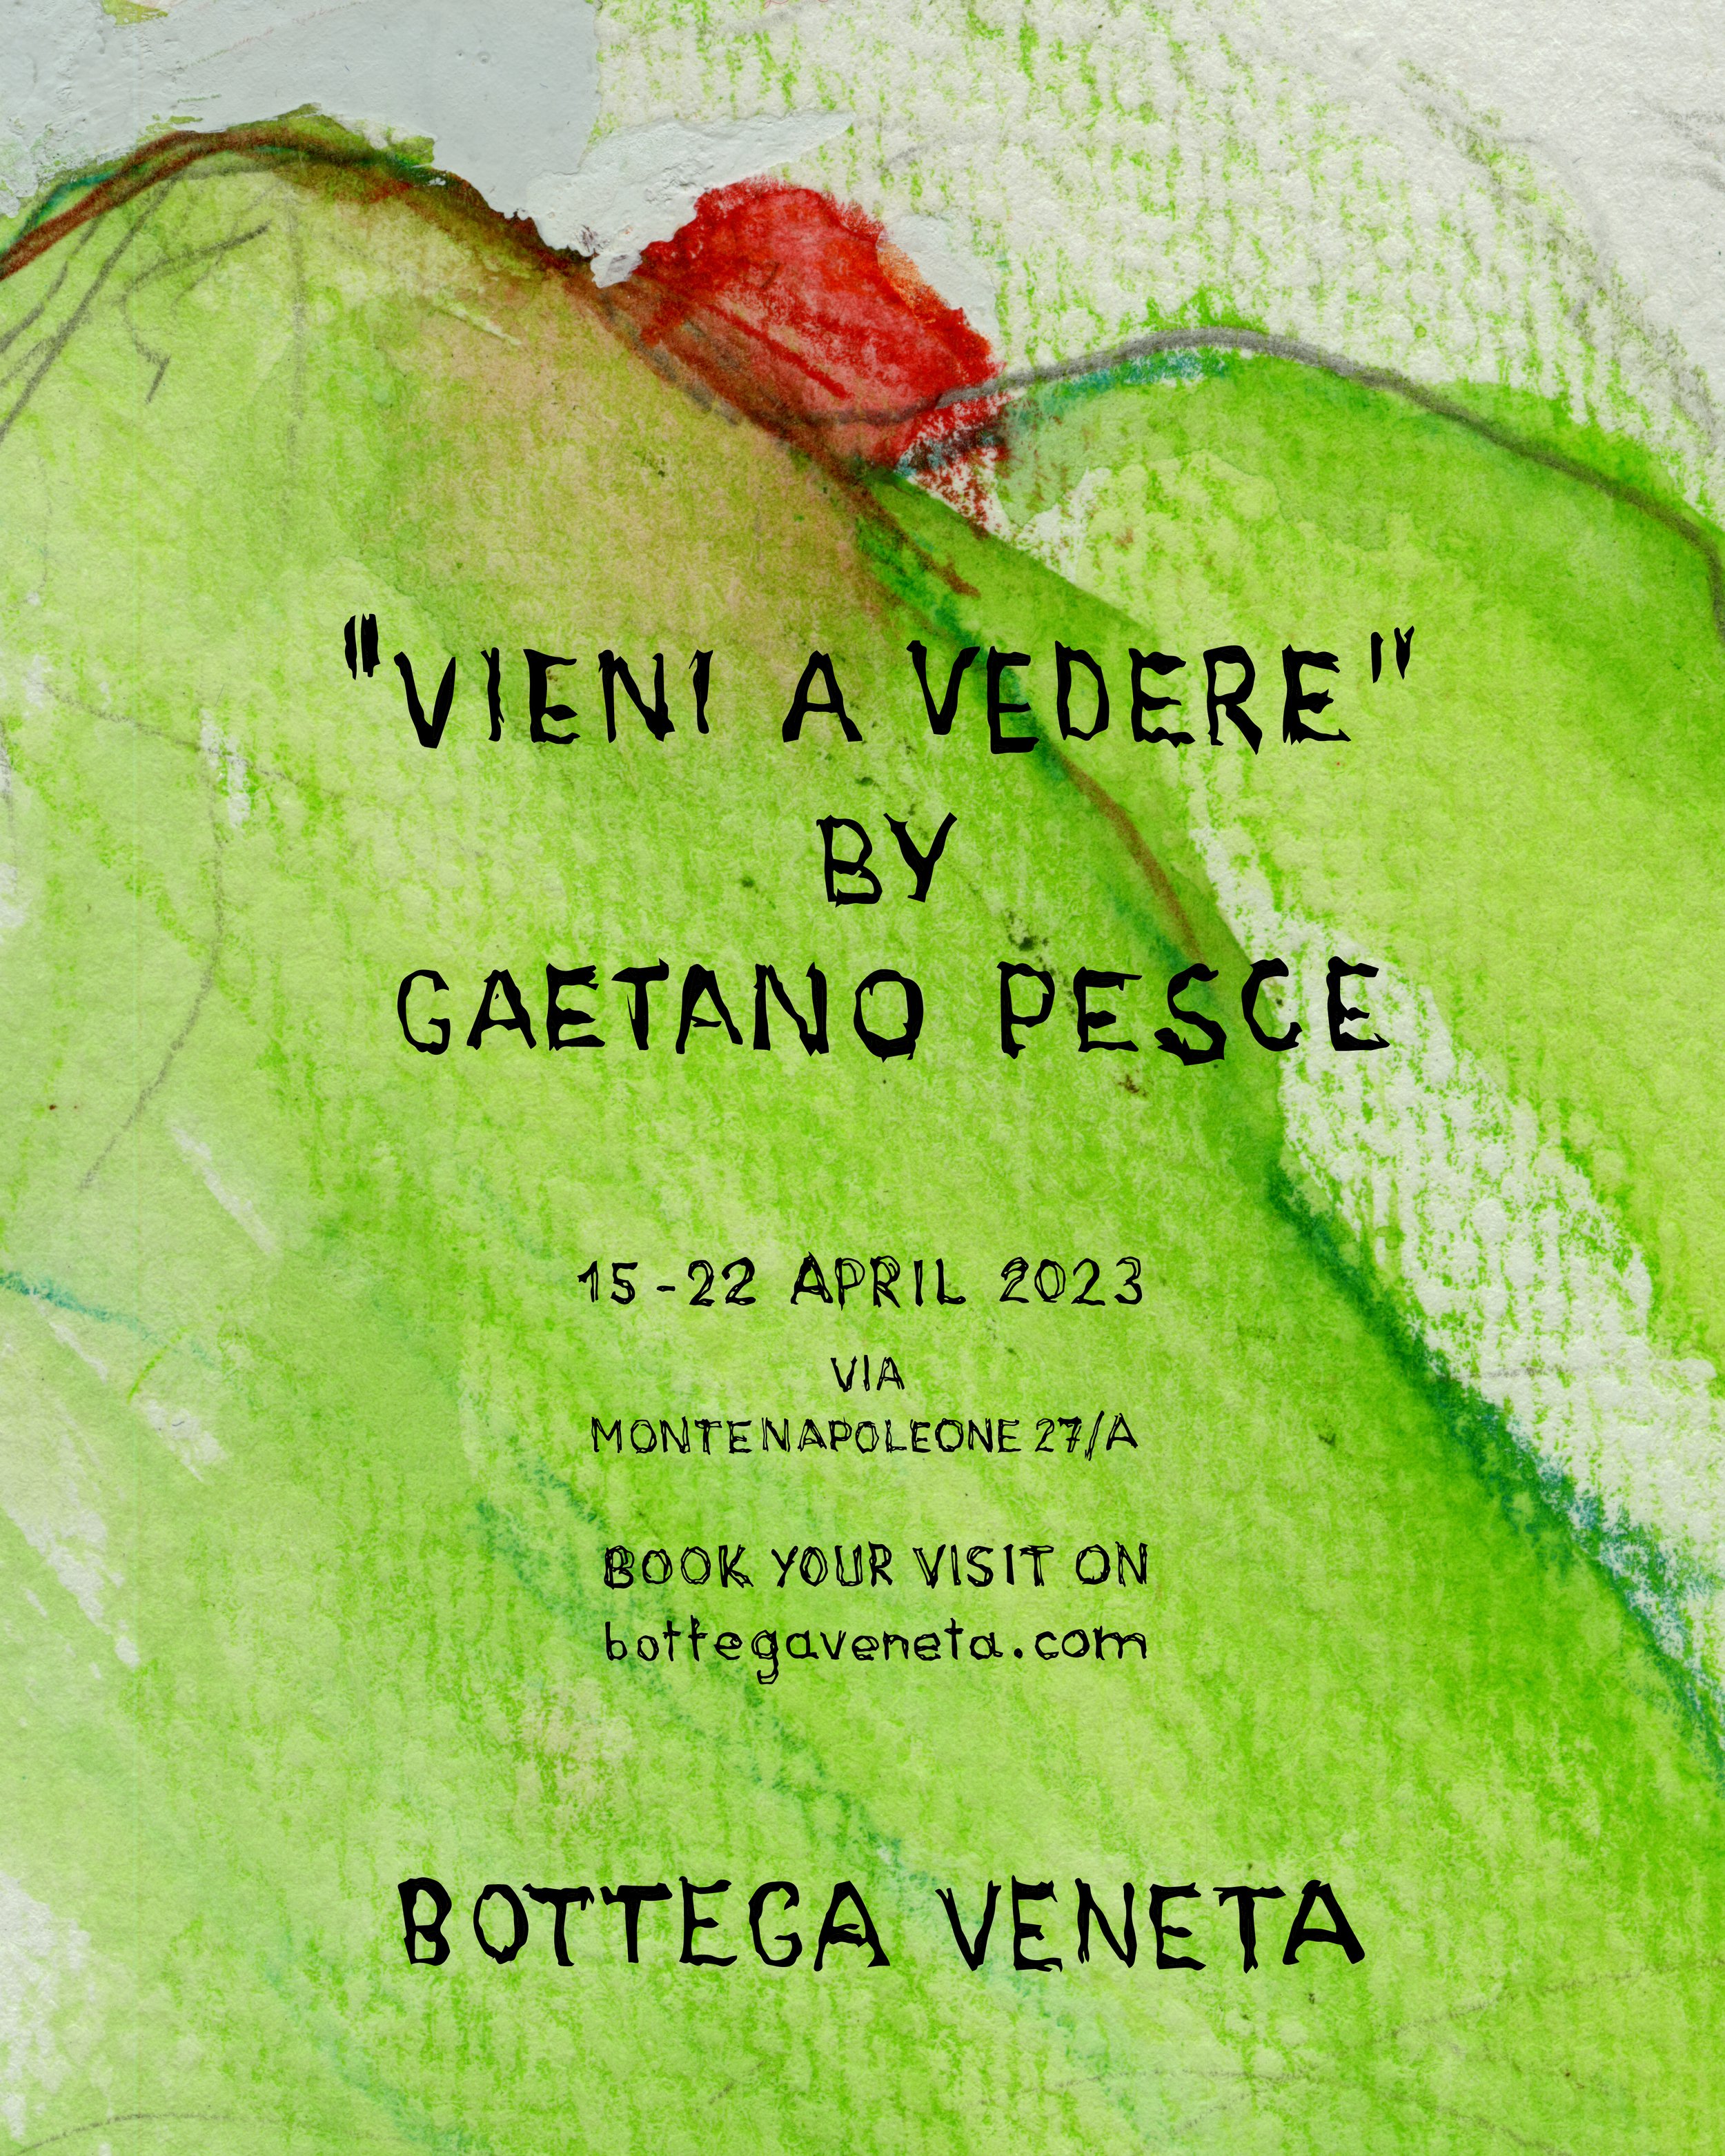 BottegaVeneta_poster_4x5-01.jpg